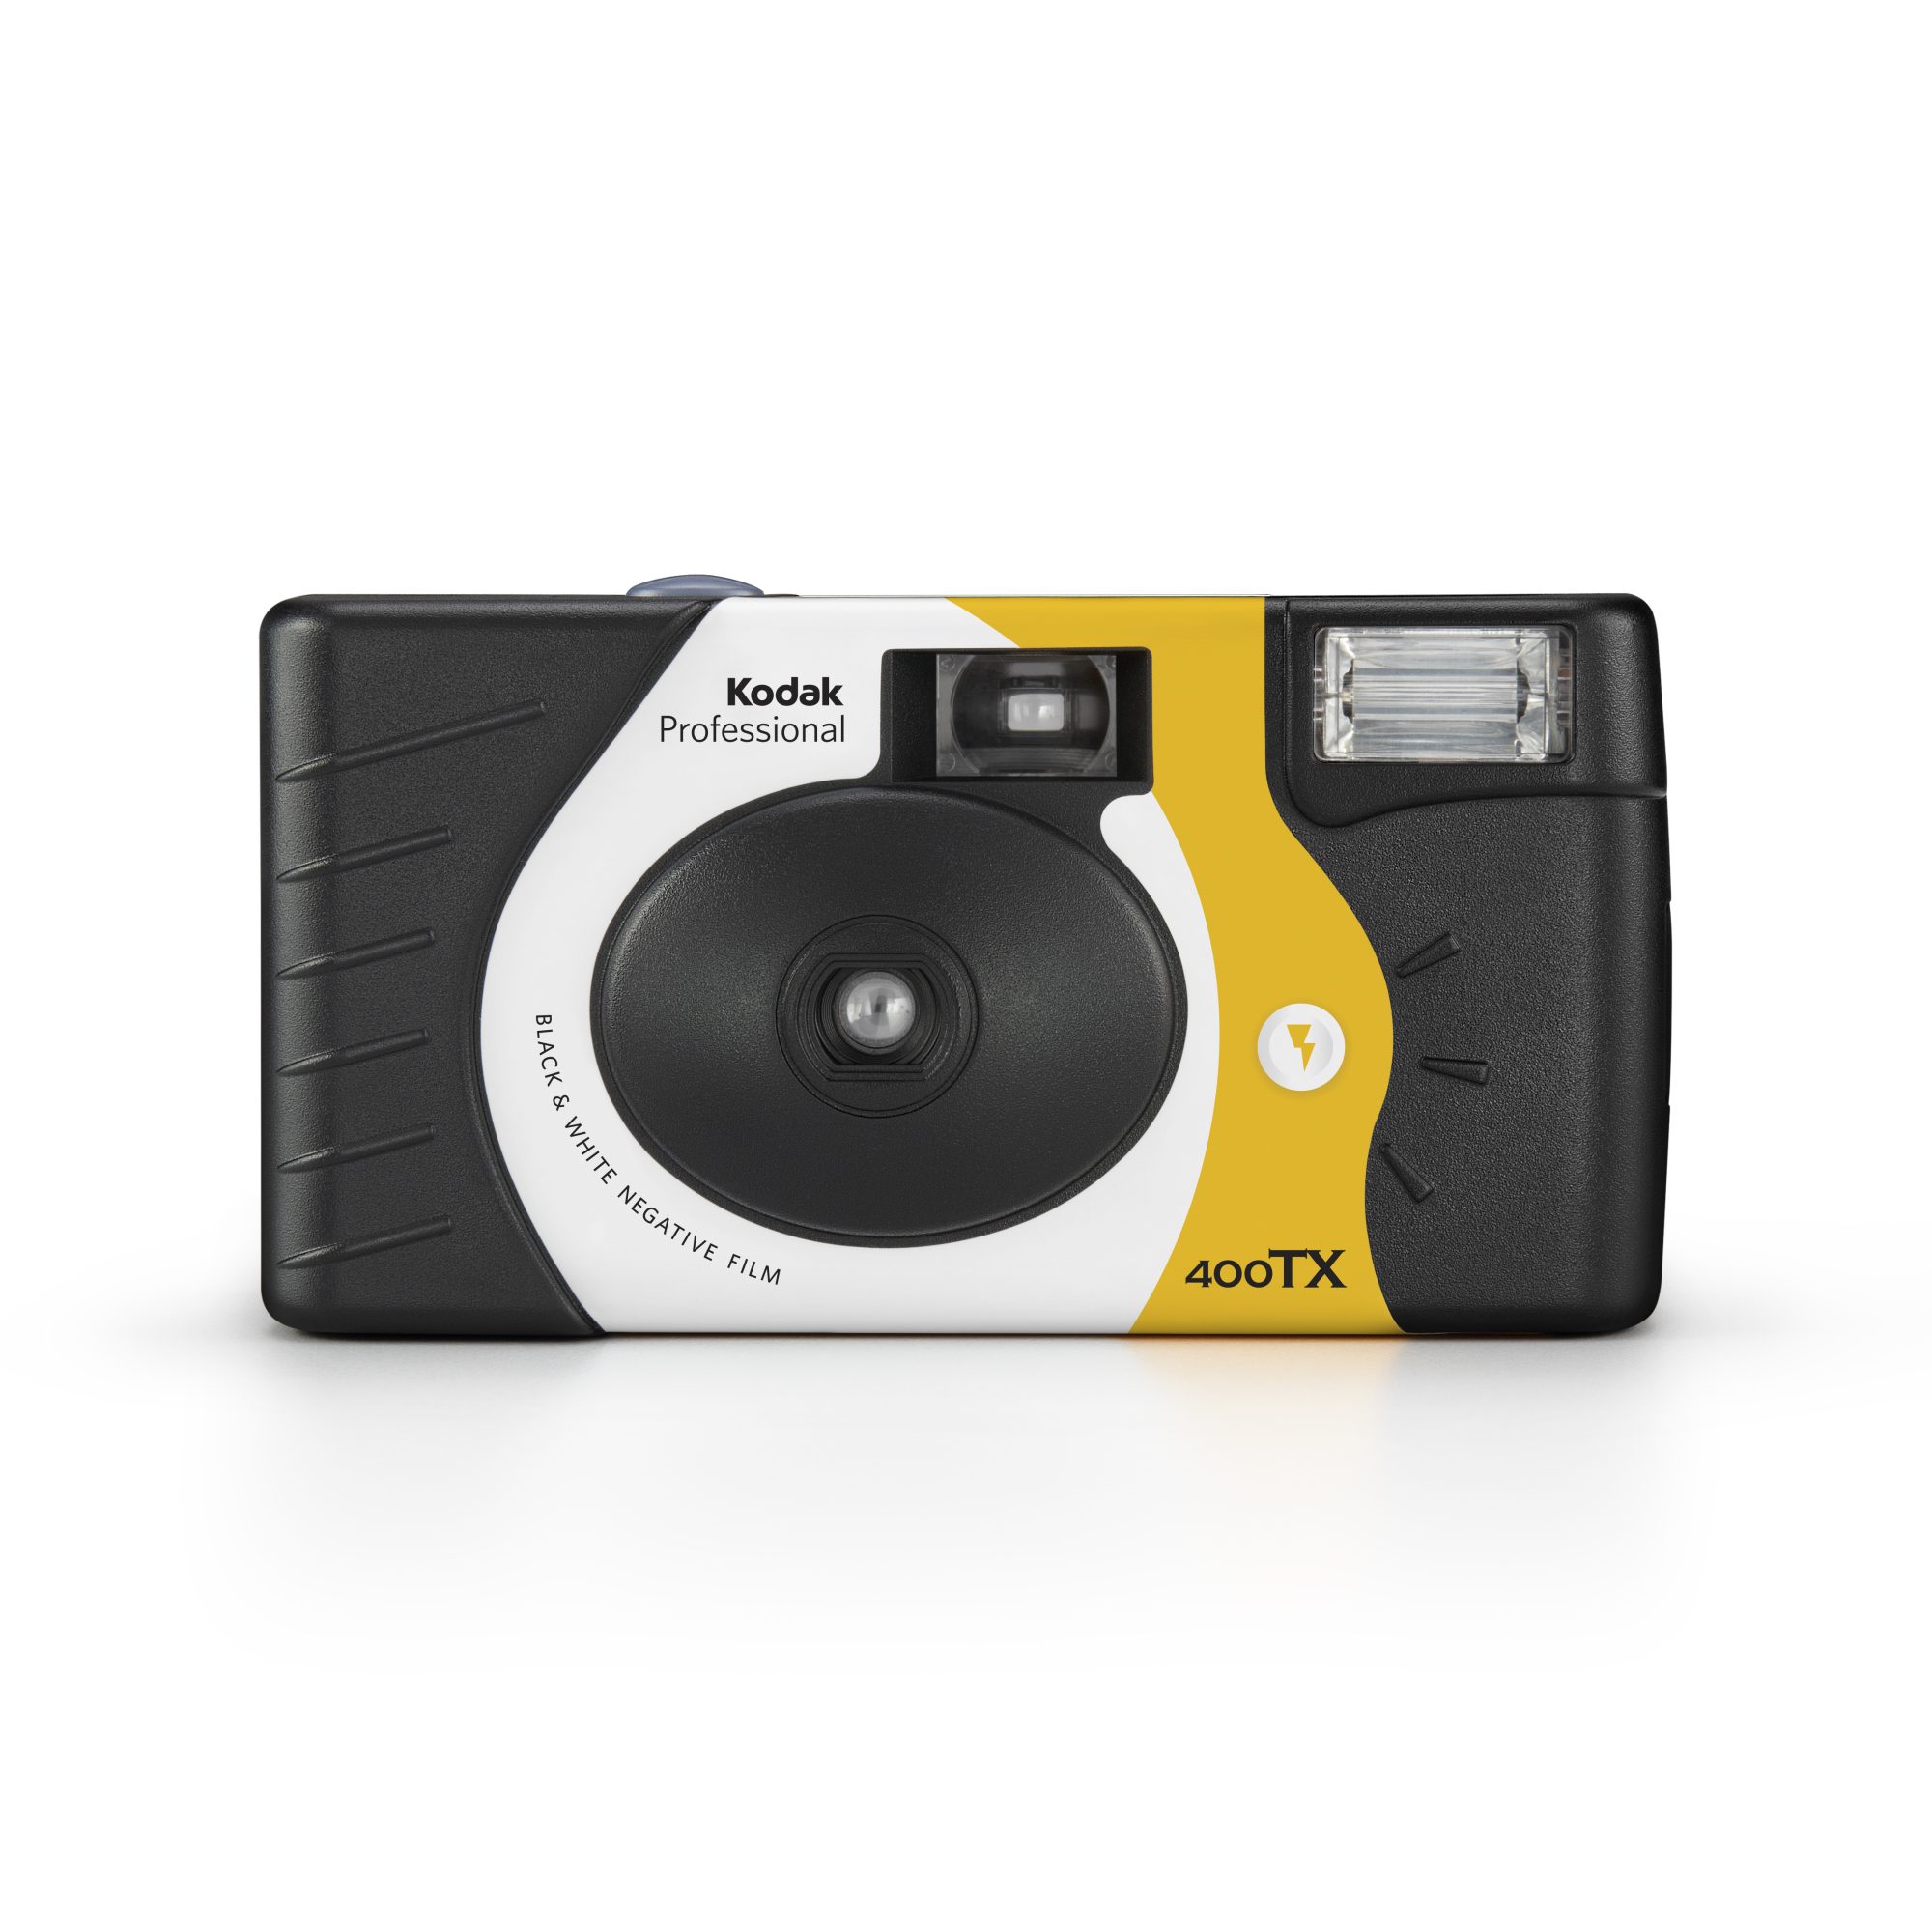 Kodak Professional Tri-X single-use camera (Pic: Kodak Alaris)